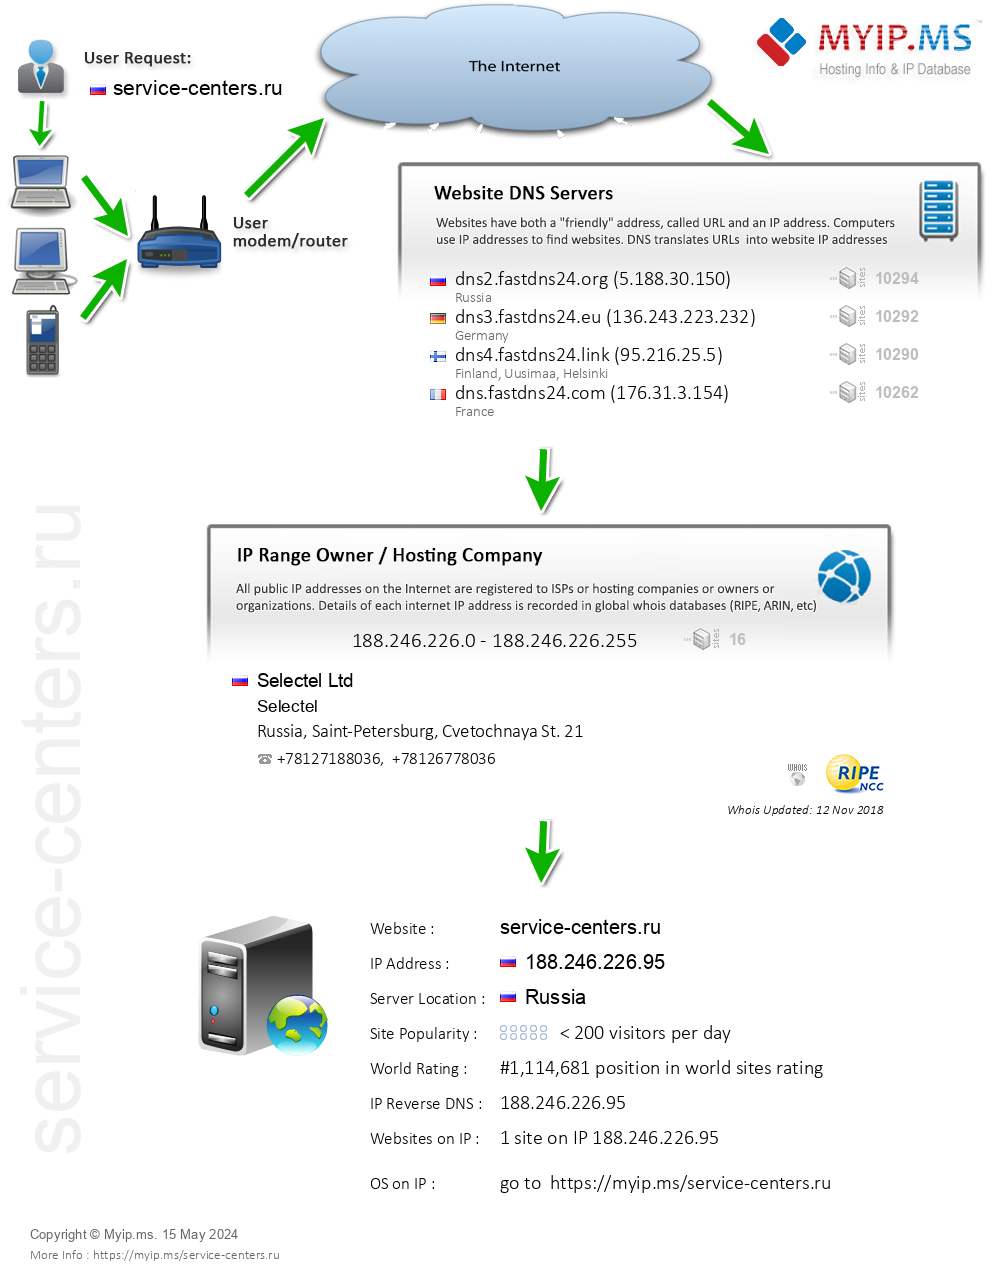 Service-centers.ru - Website Hosting Visual IP Diagram